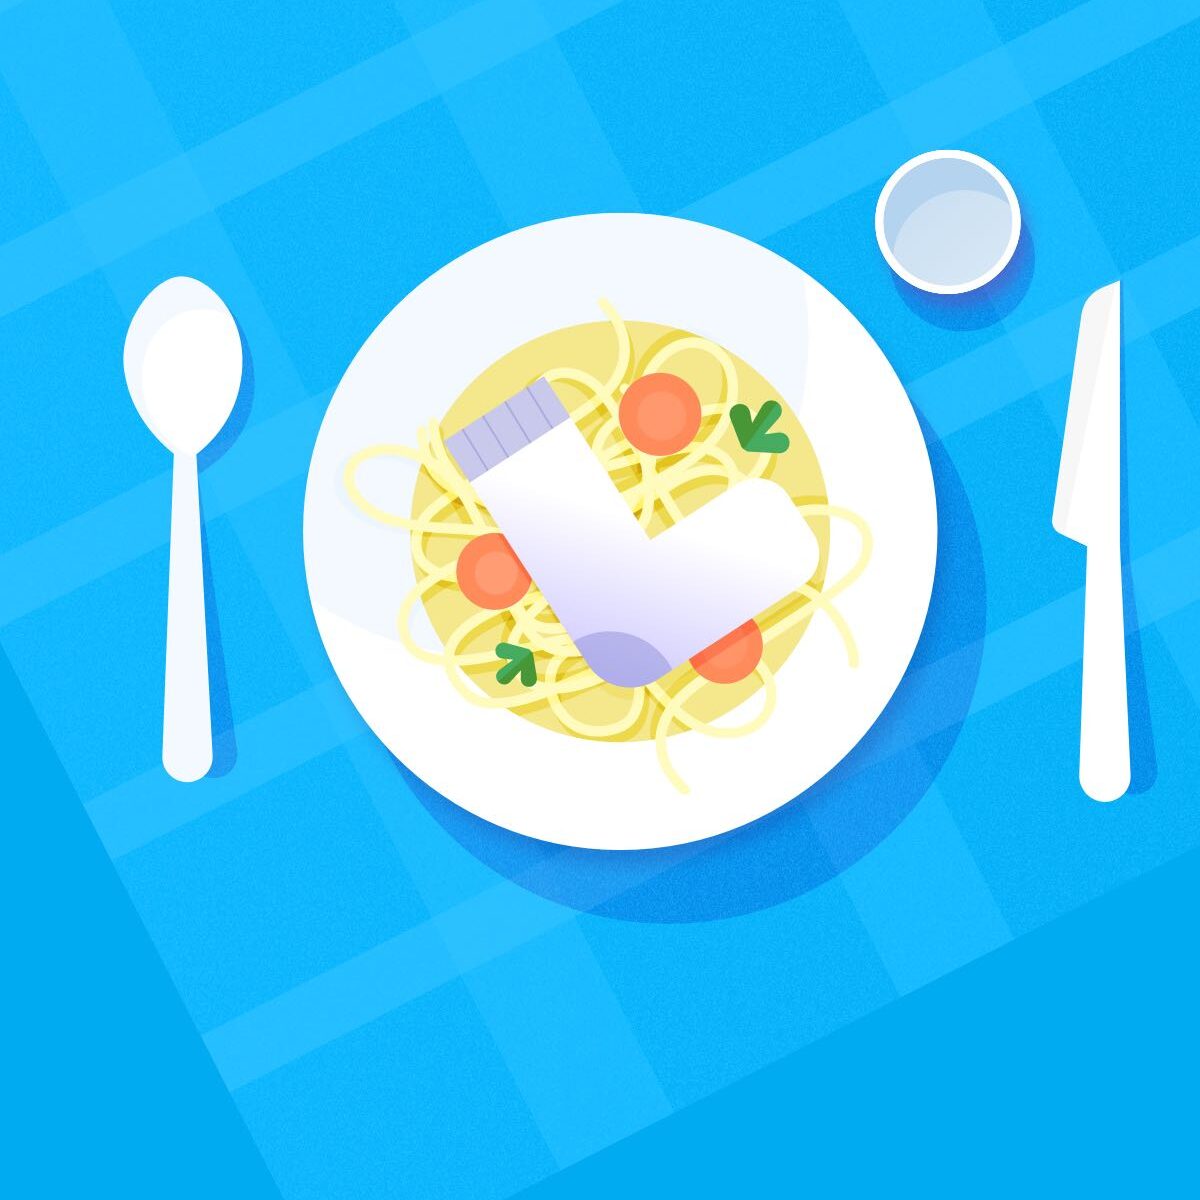 foods plate